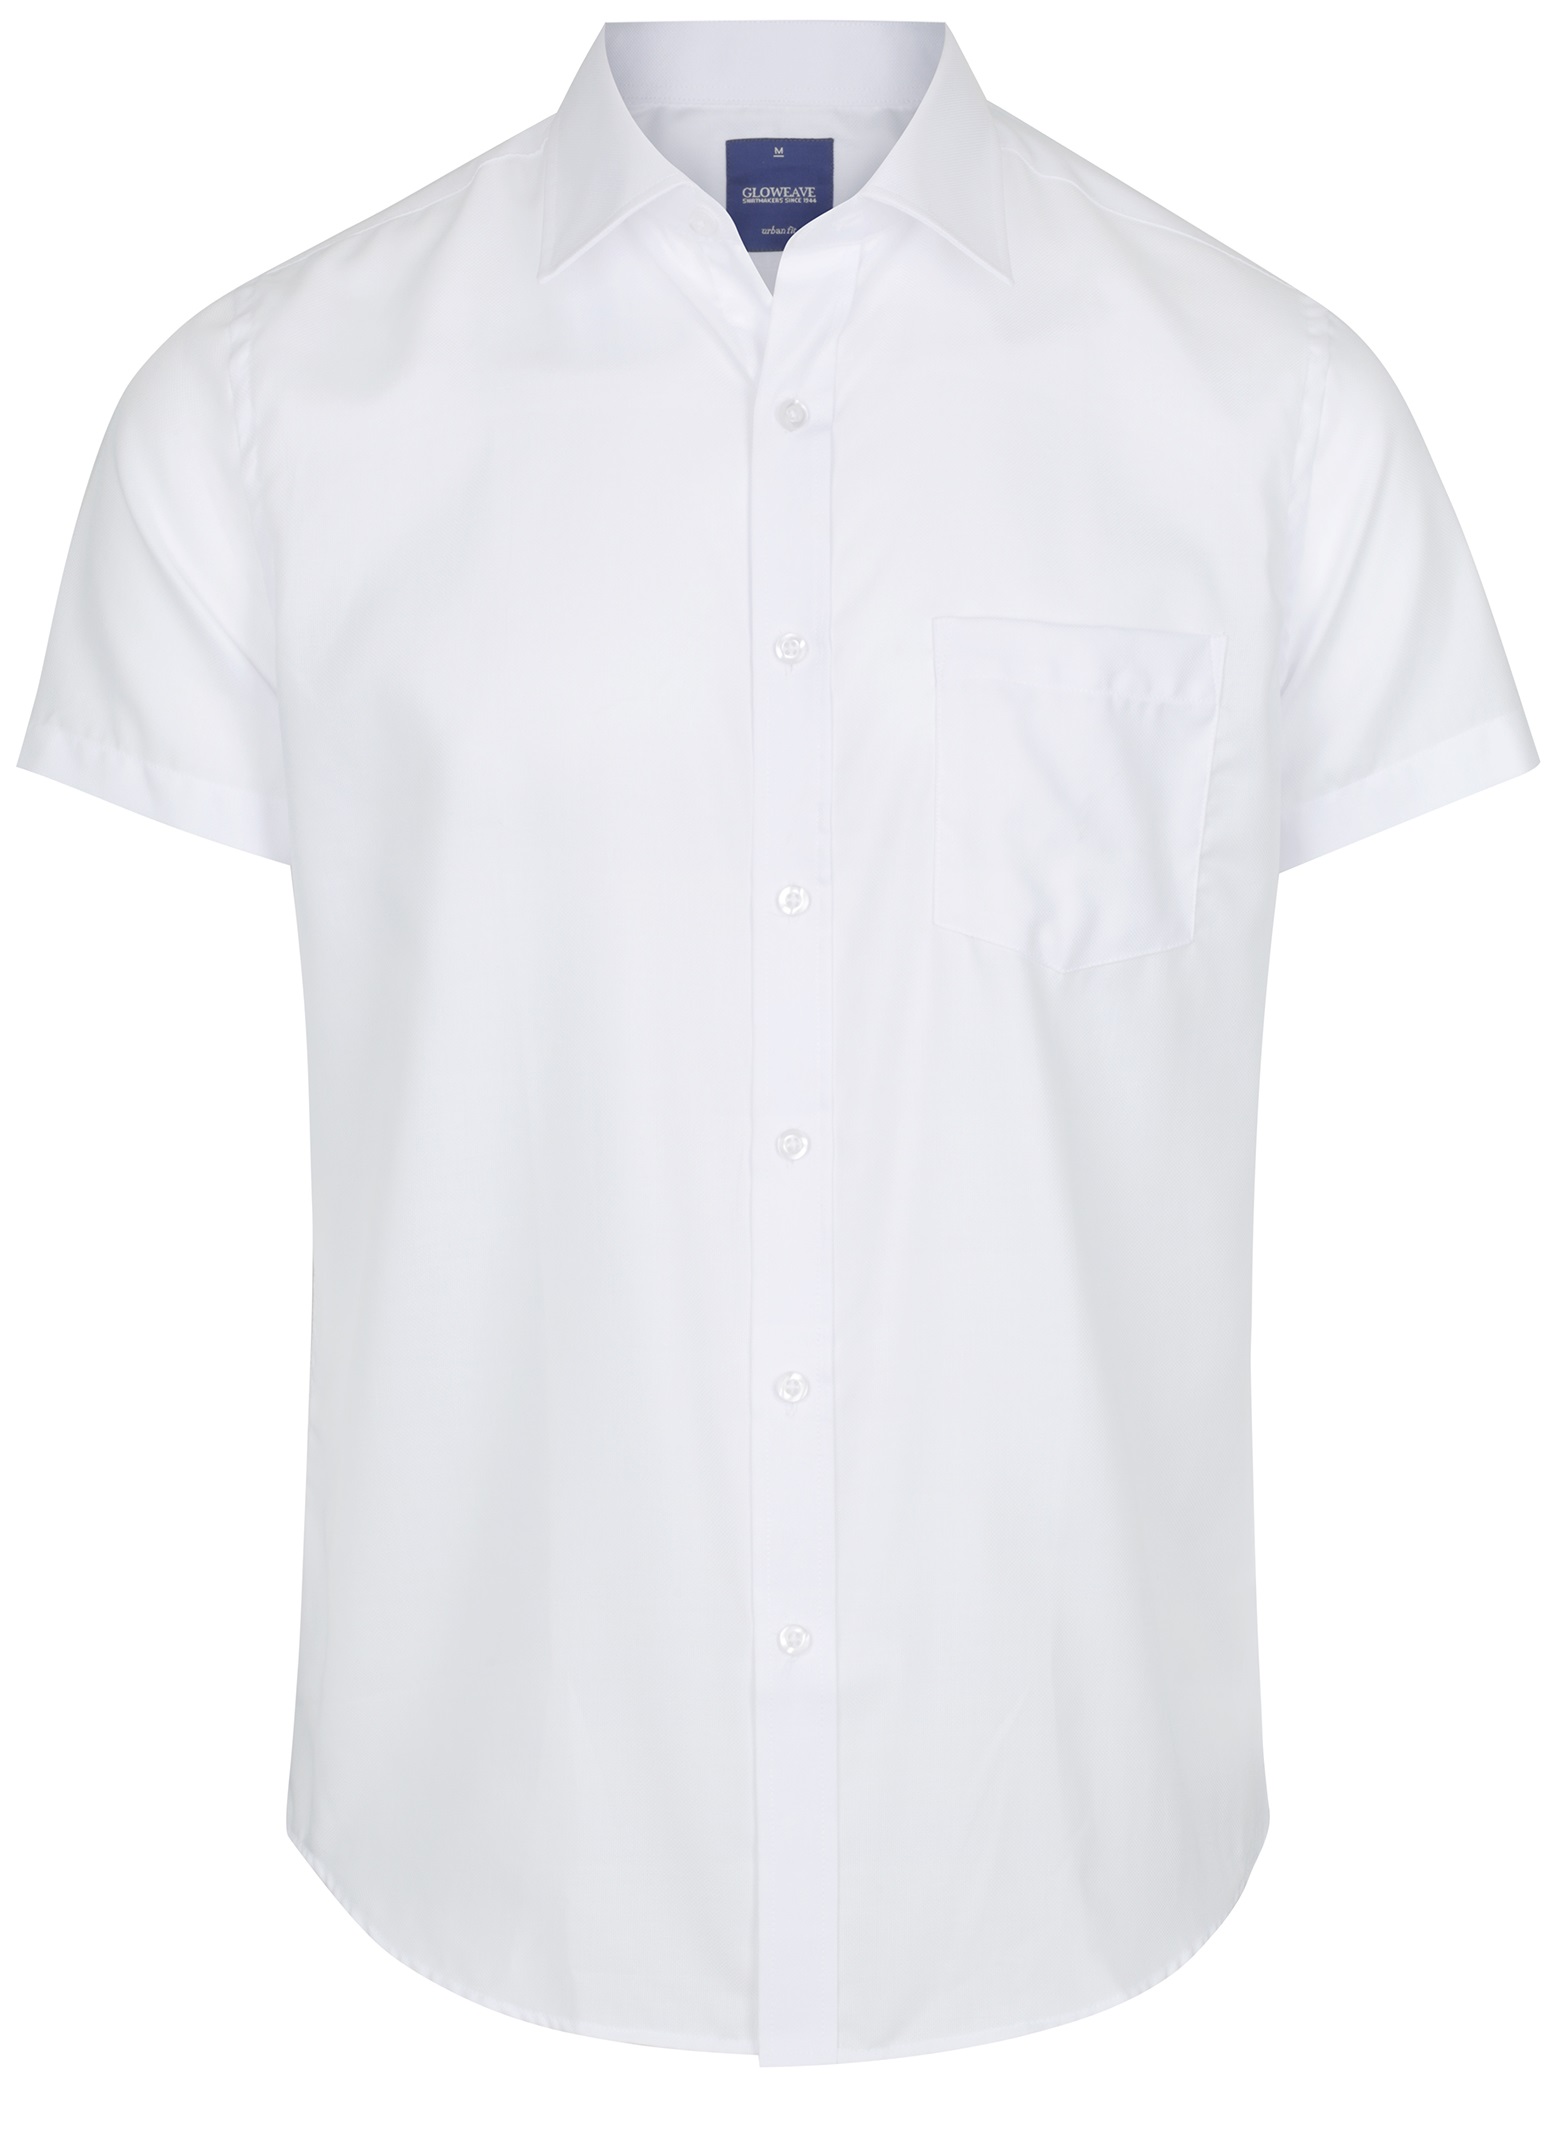 Men's White Short Sleeve Shirt Slim Fit by Gloweave Buy Online